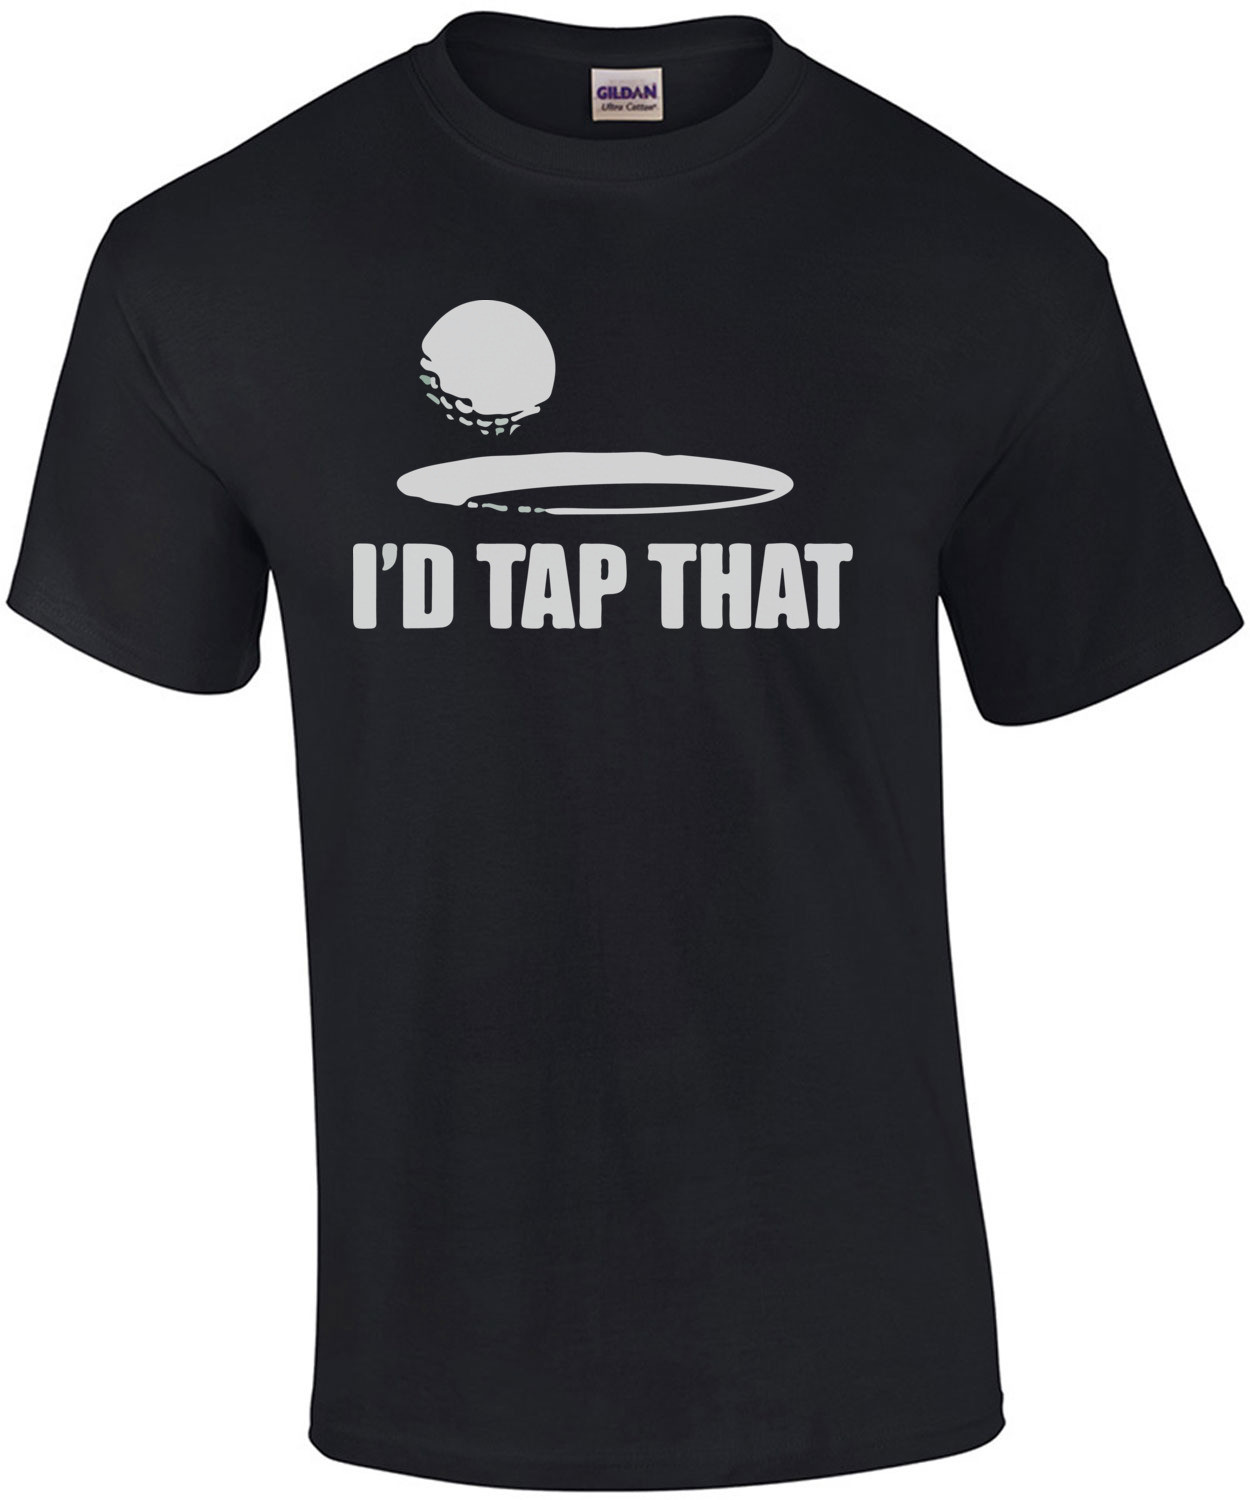 I'd Tap That - Golf T-Shirt